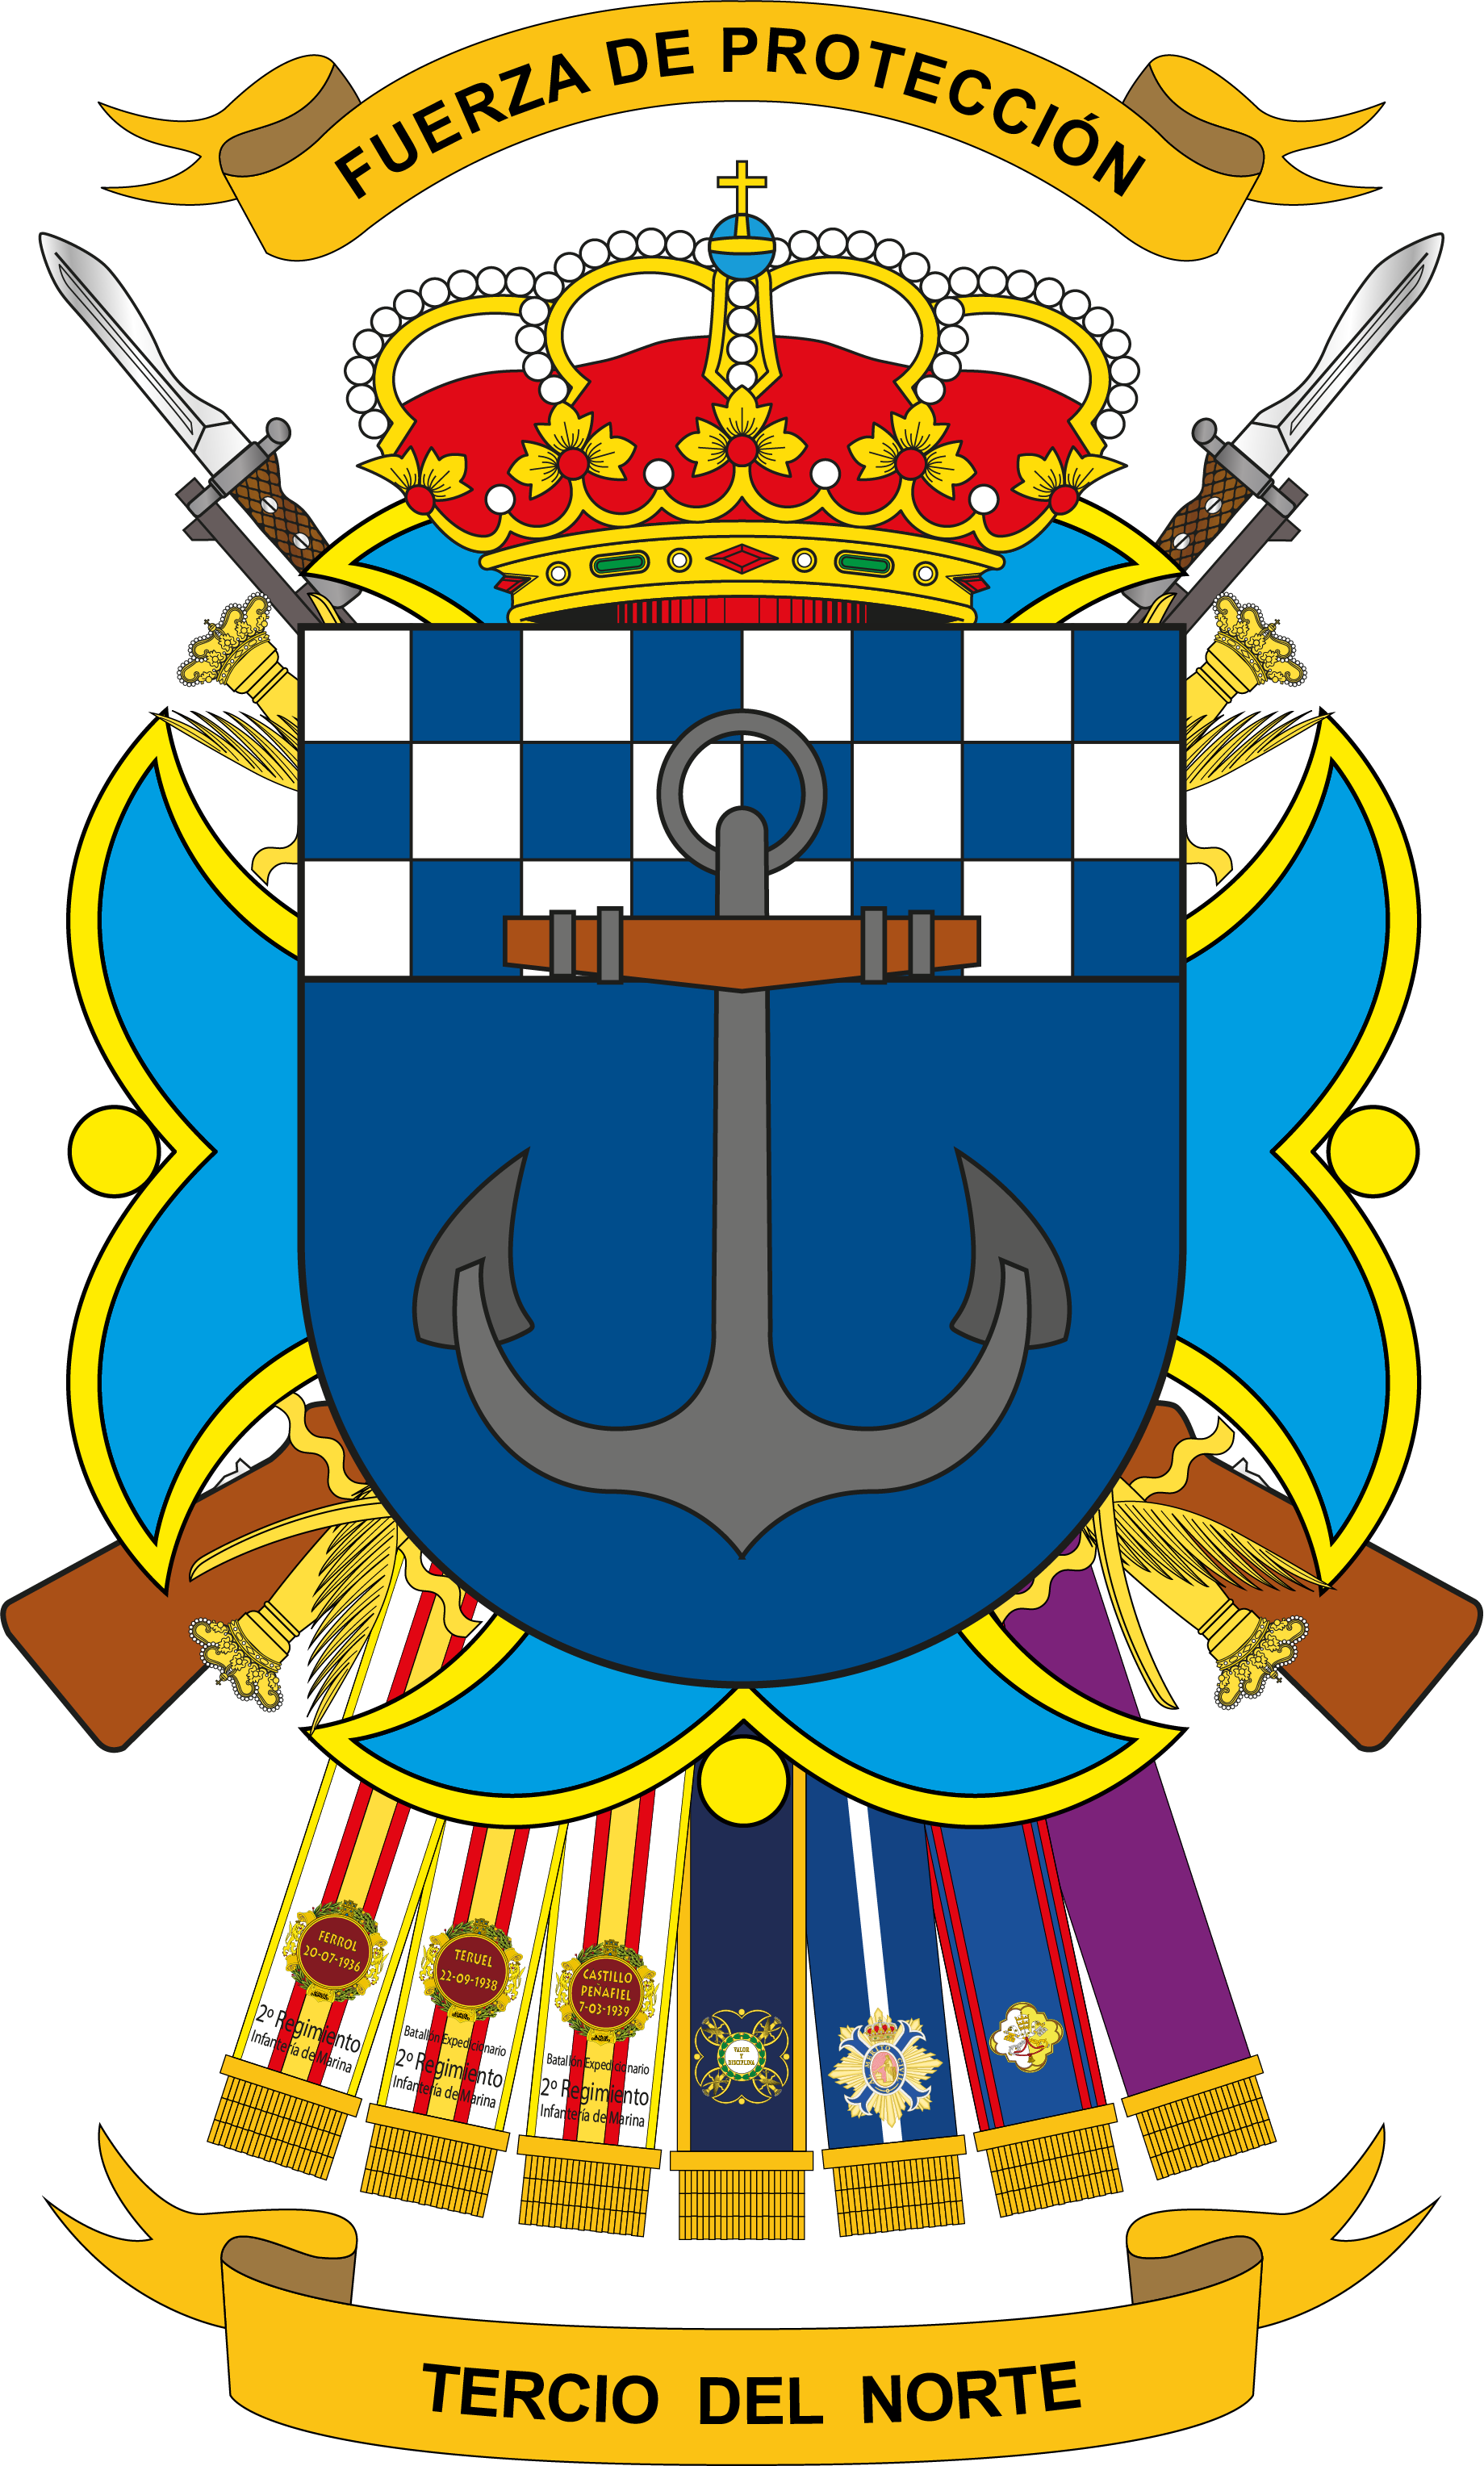 Northern Regiment (TERNOR)
